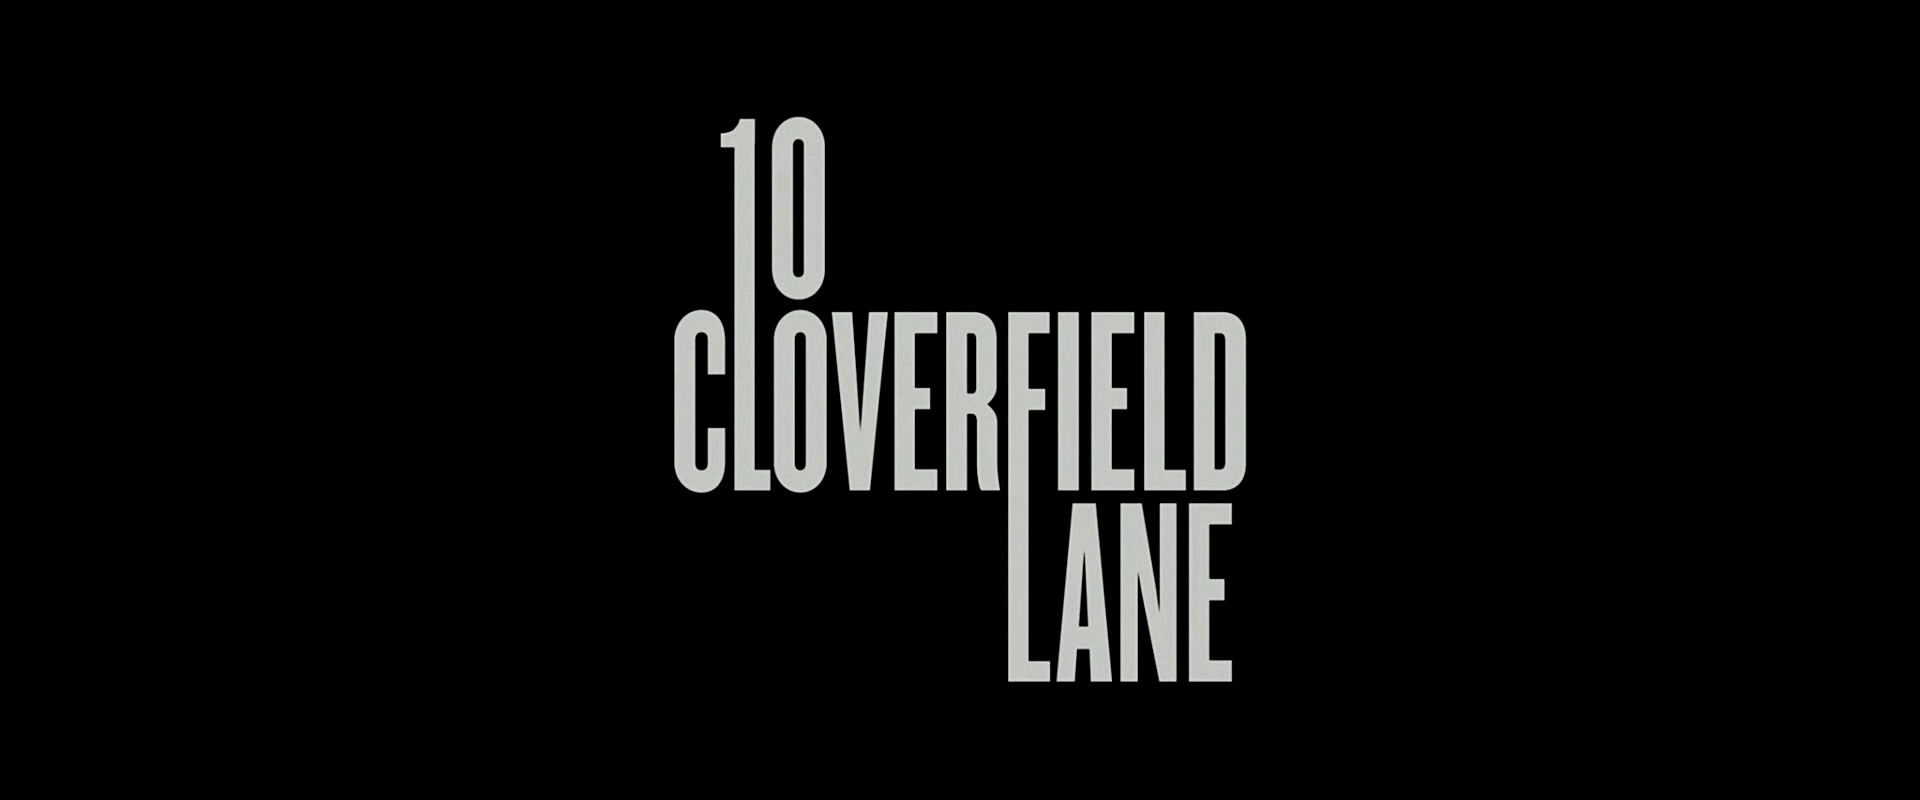 10 CLOVERFIELD LANE de Dan Trachtenberg (2016)